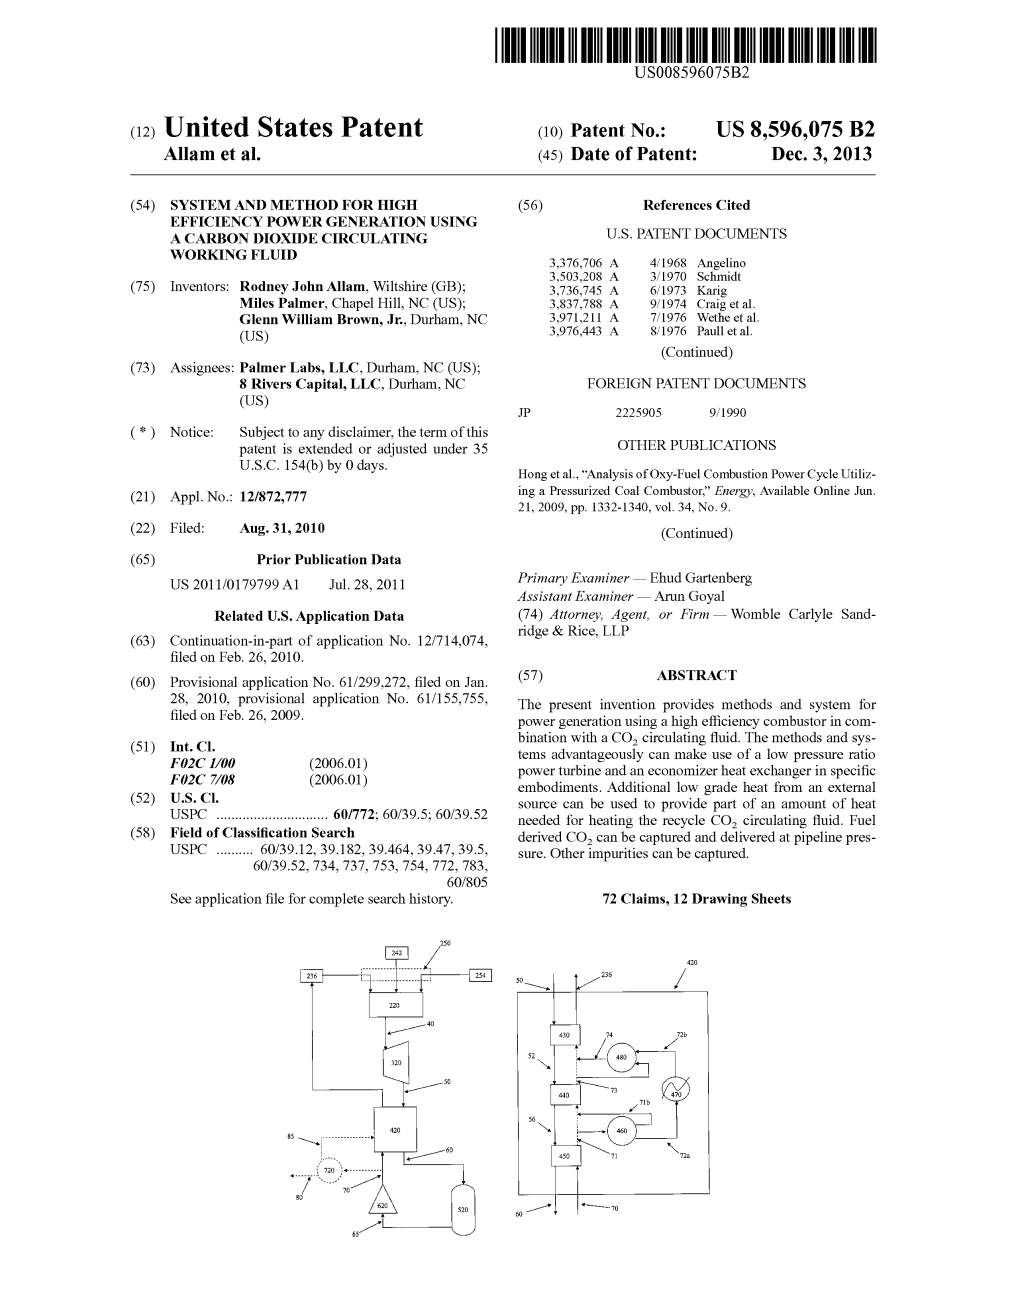 (10) Patent No.: US 8596075 B2